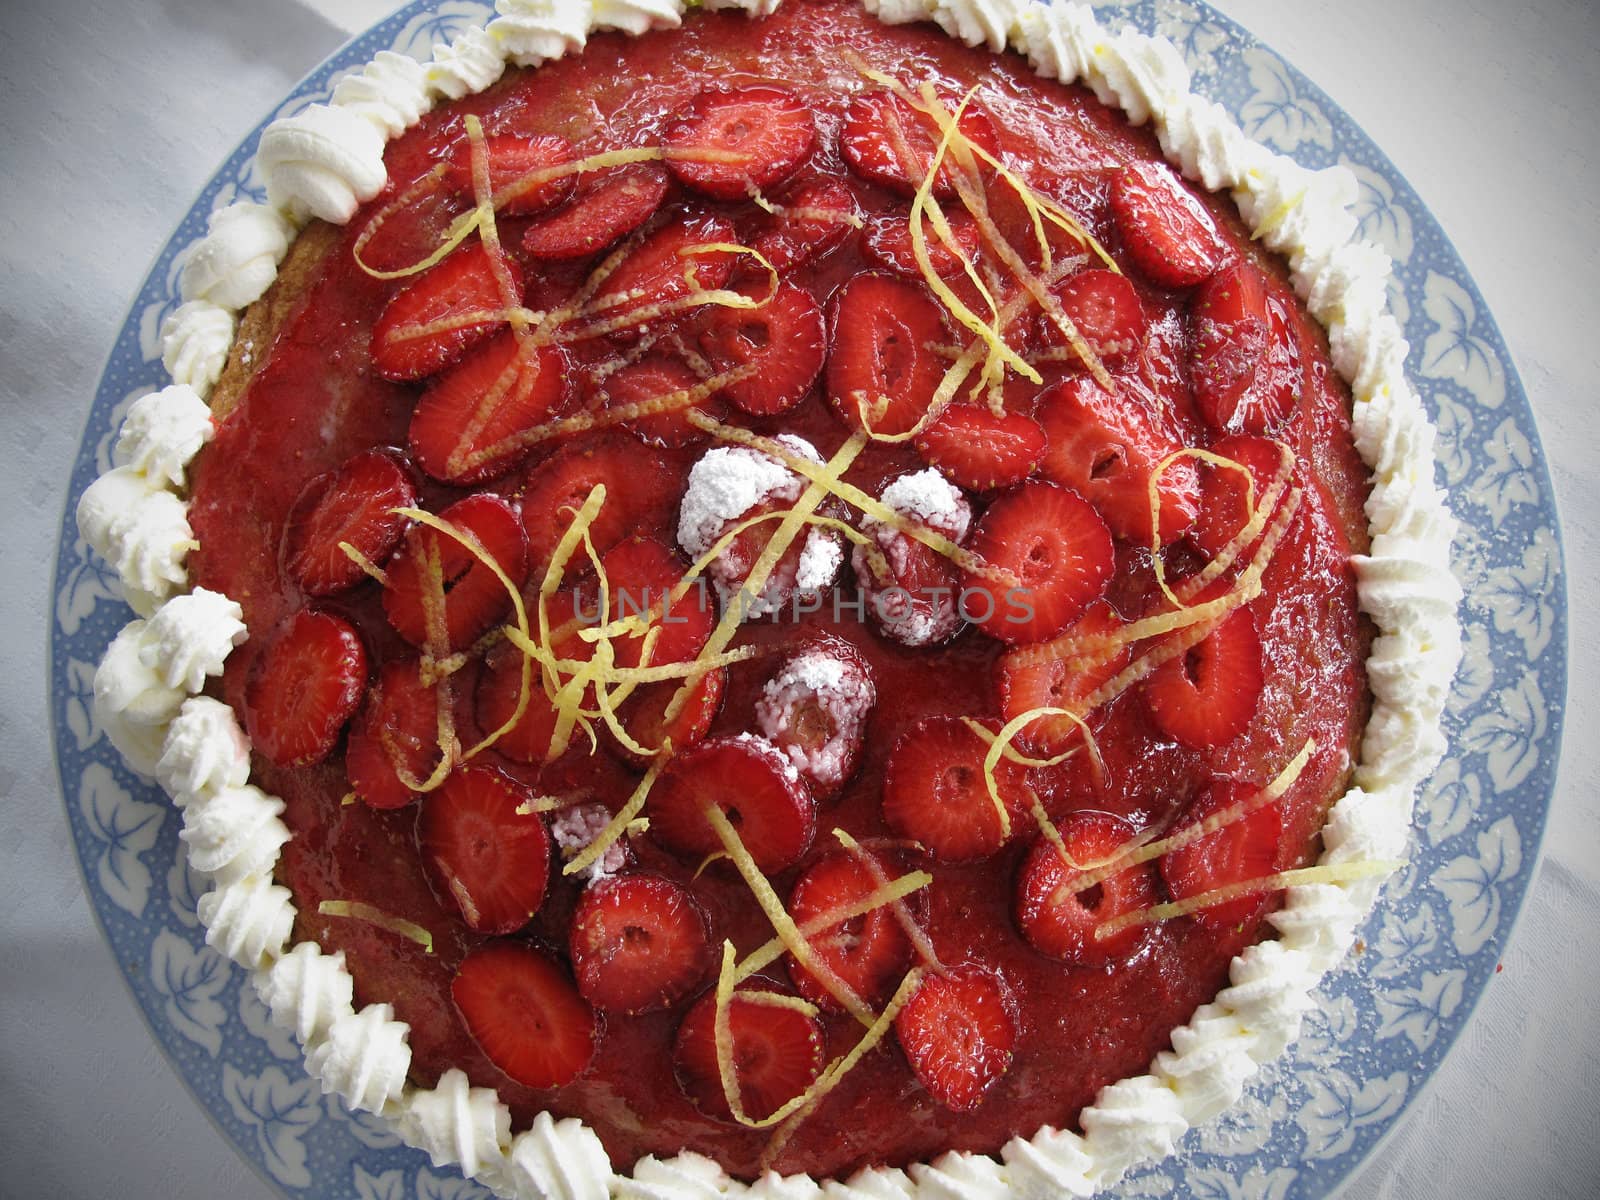 Nice strawberry cake on plate.